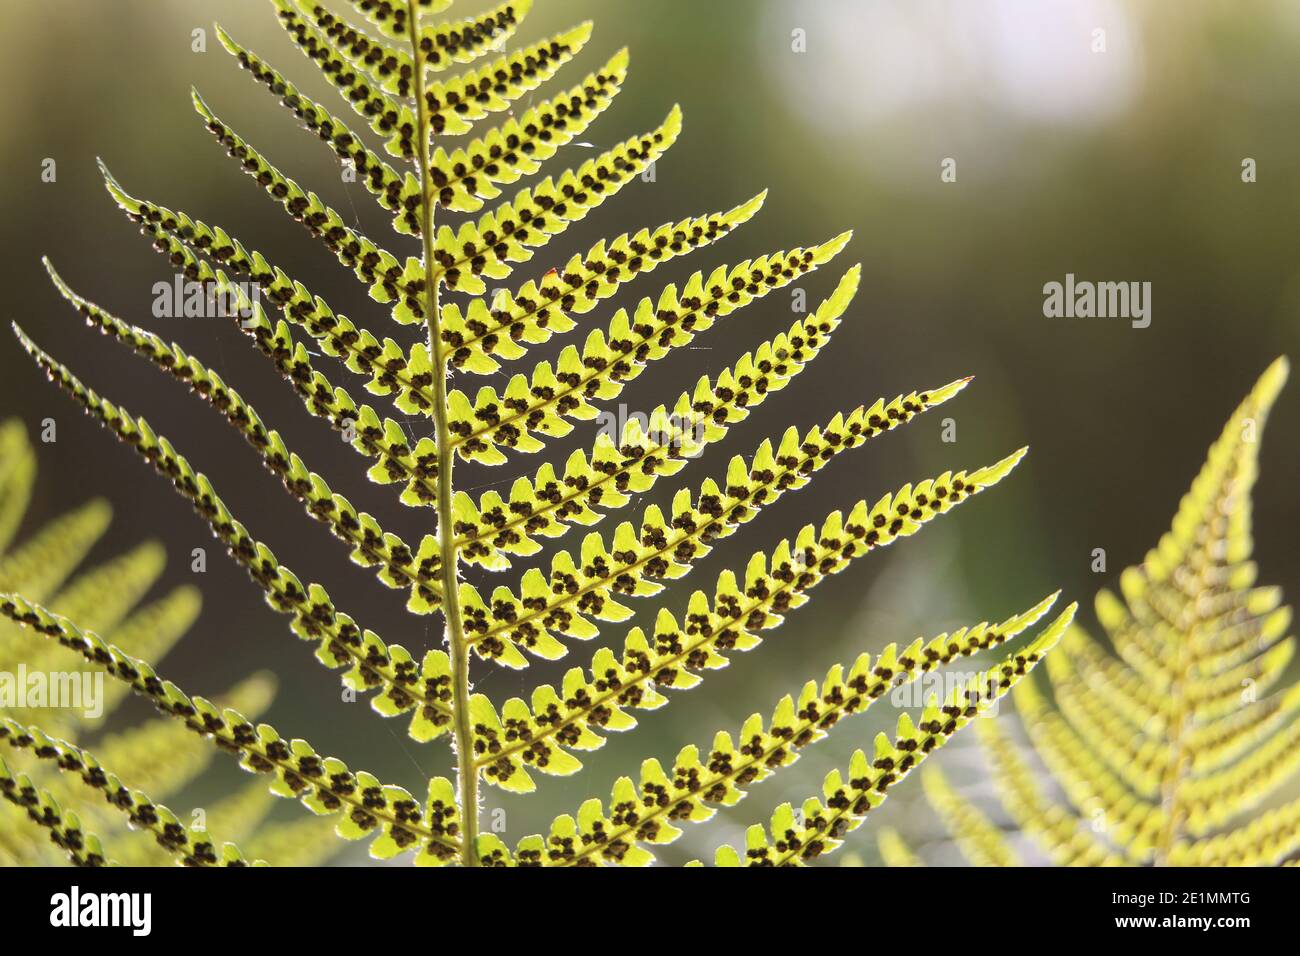 Sunlit green bracken fern leaf fronds, eagle fern, Pteridium aquilinum, underside view showing sori and spores, closeup Stock Photo